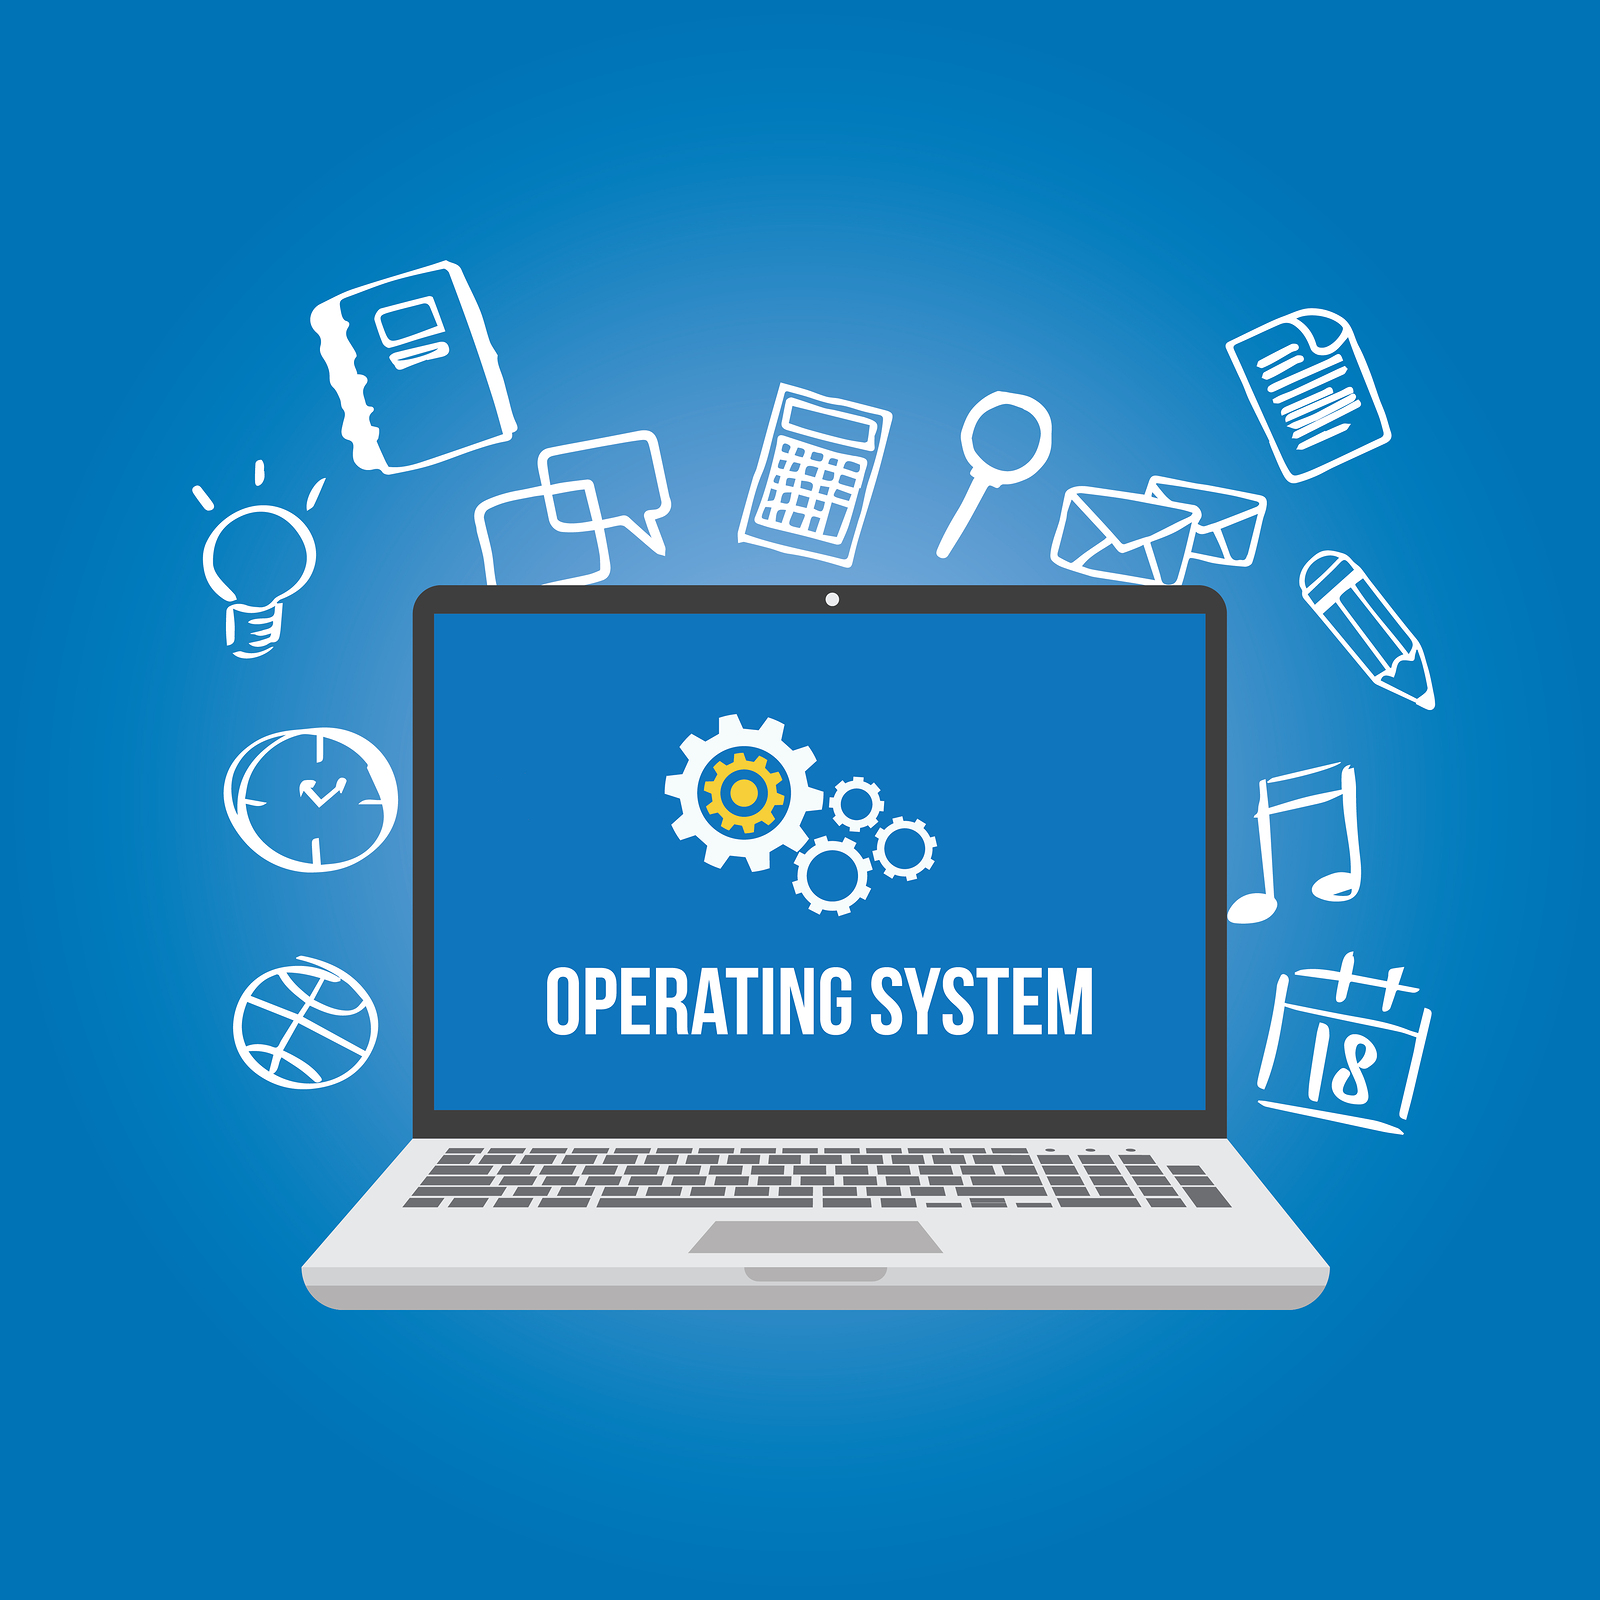 OPERATING SYSTEM(BCA)